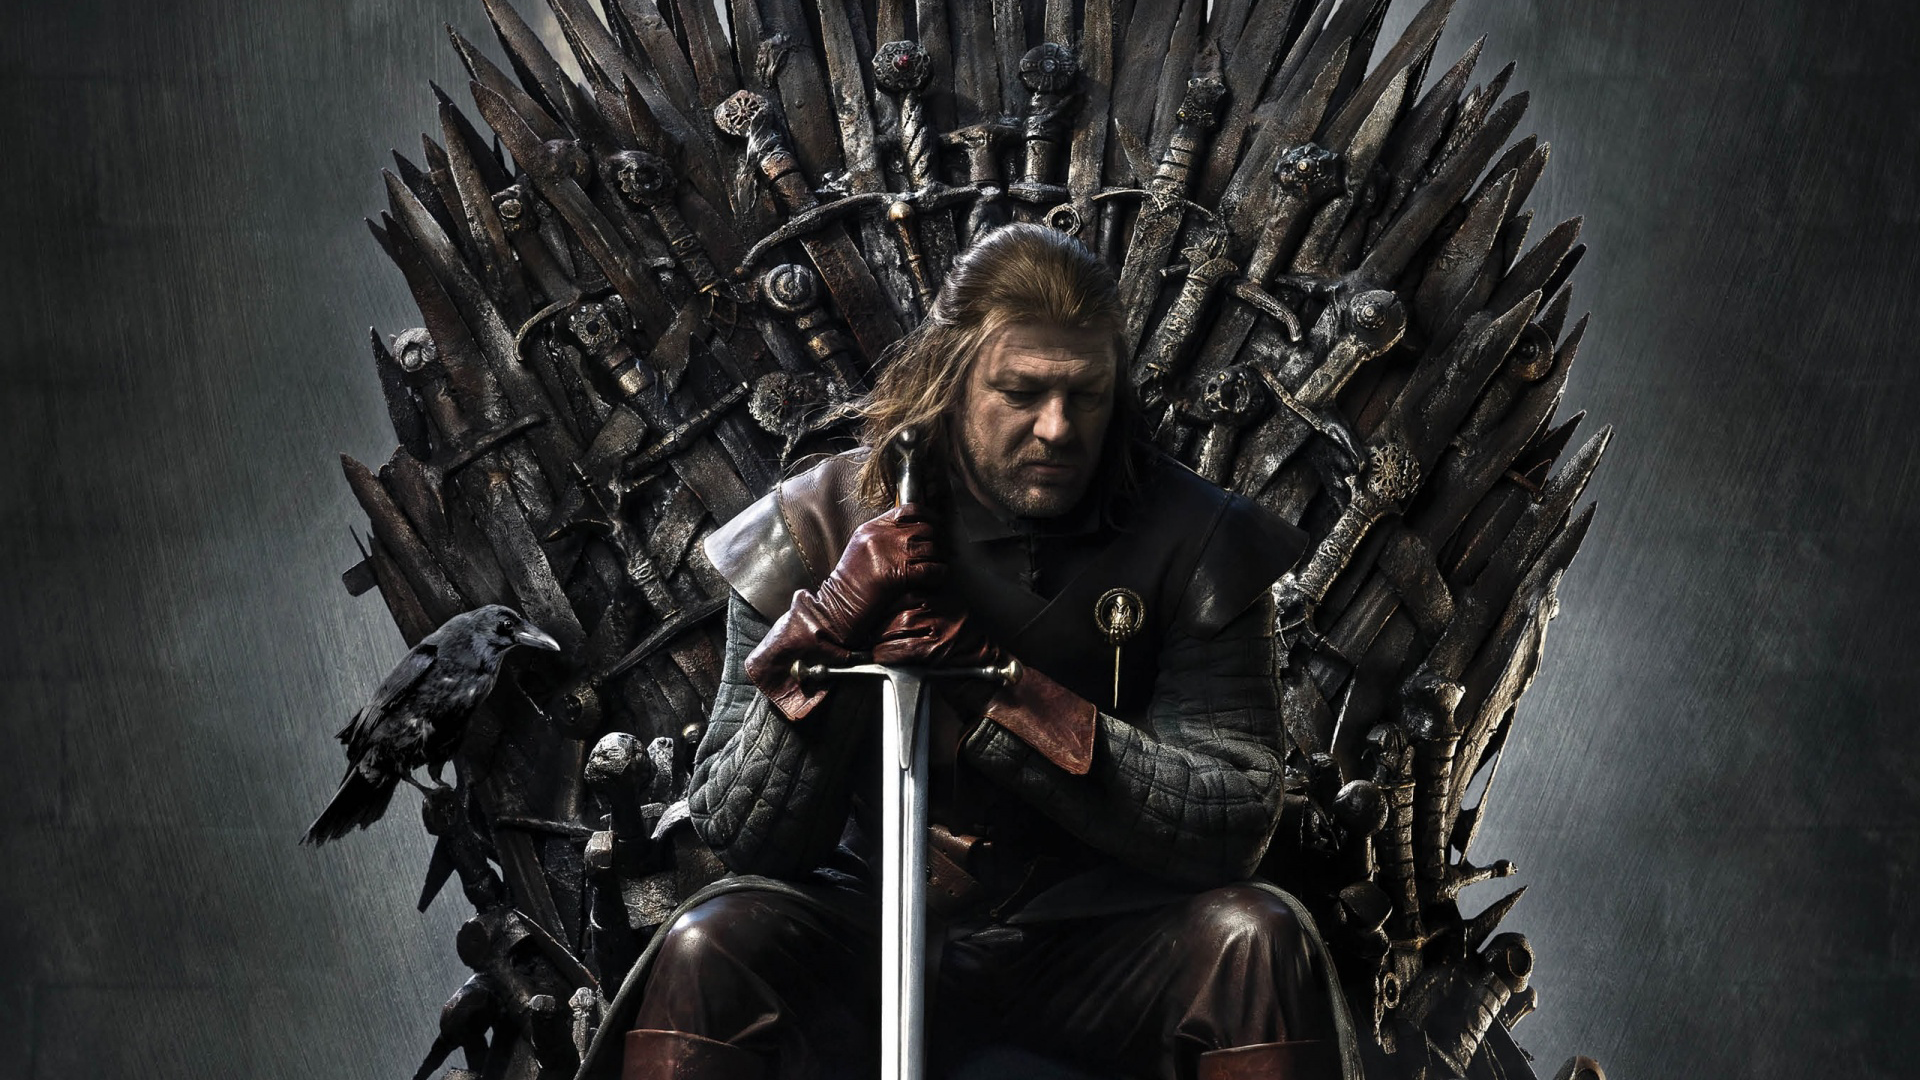 People 1920x1080 Game of Thrones Ned Stark Iron Throne Sean Bean men fantasy art raven sword actor celebrity TV series sitting